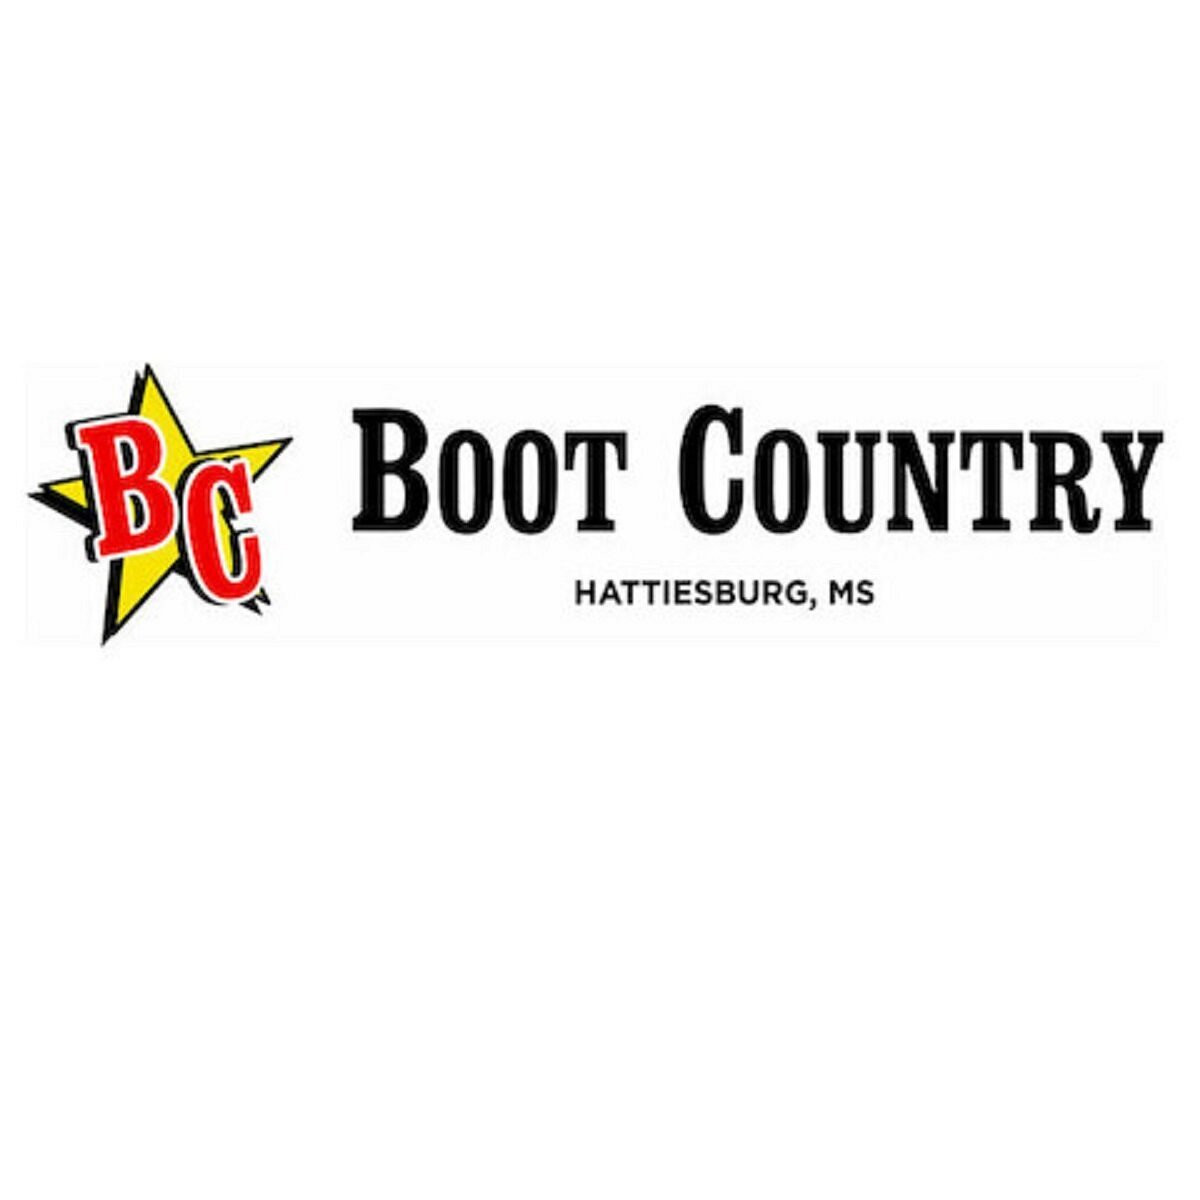 Boot Country (Hattiesburg, MS): Hours, Address - Tripadvisor